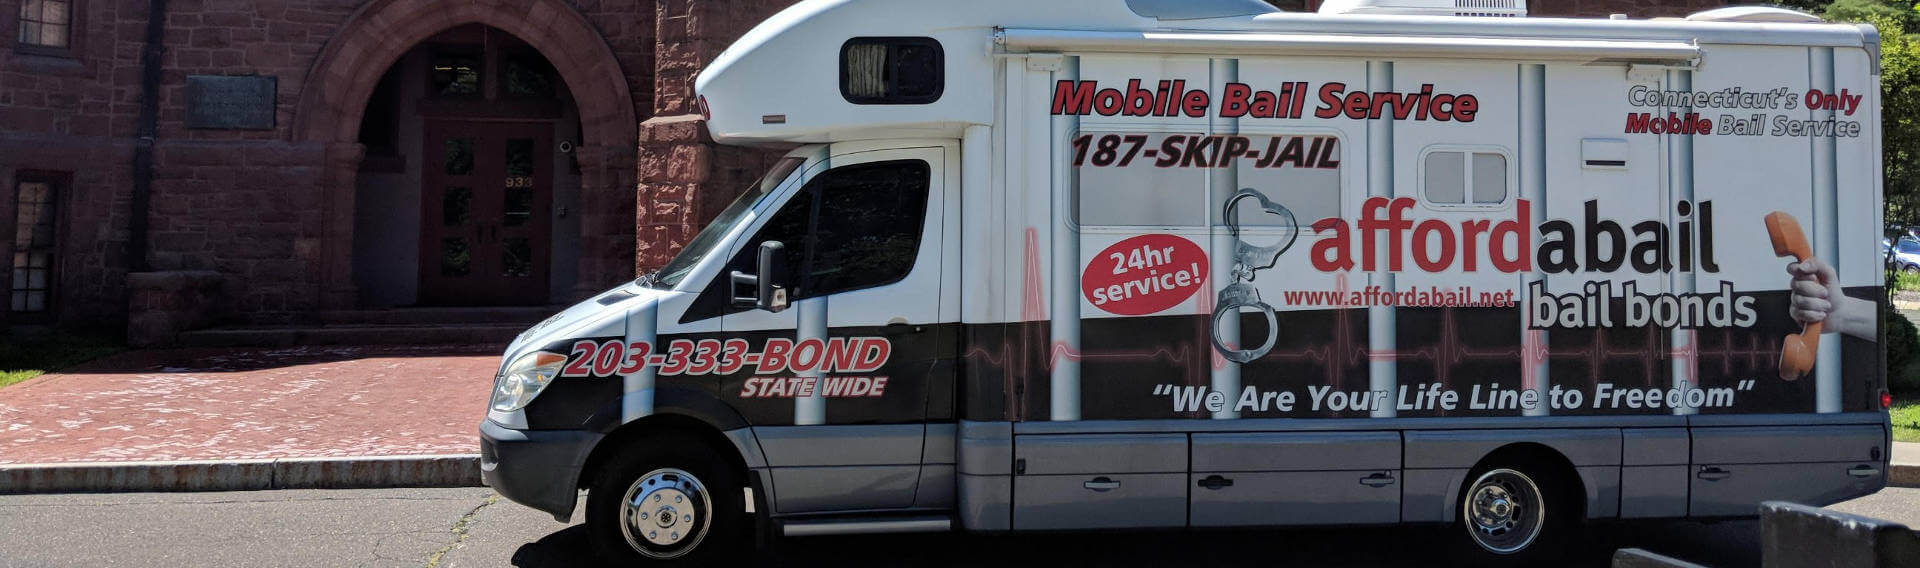 Mobile bail bonds service in Stamford CT